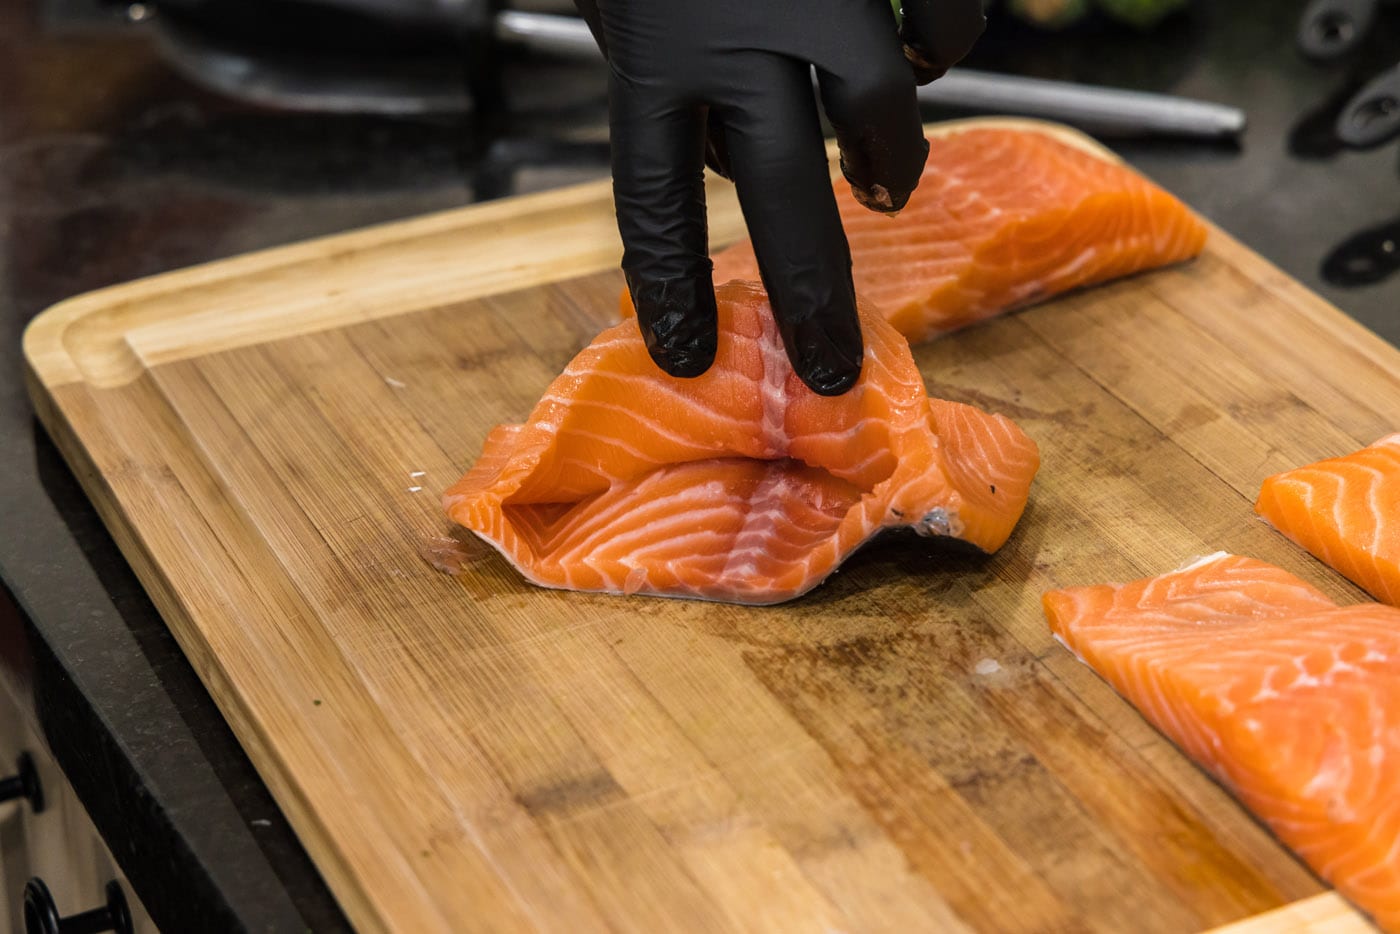 pocket sliced into salmon filet for stuffing